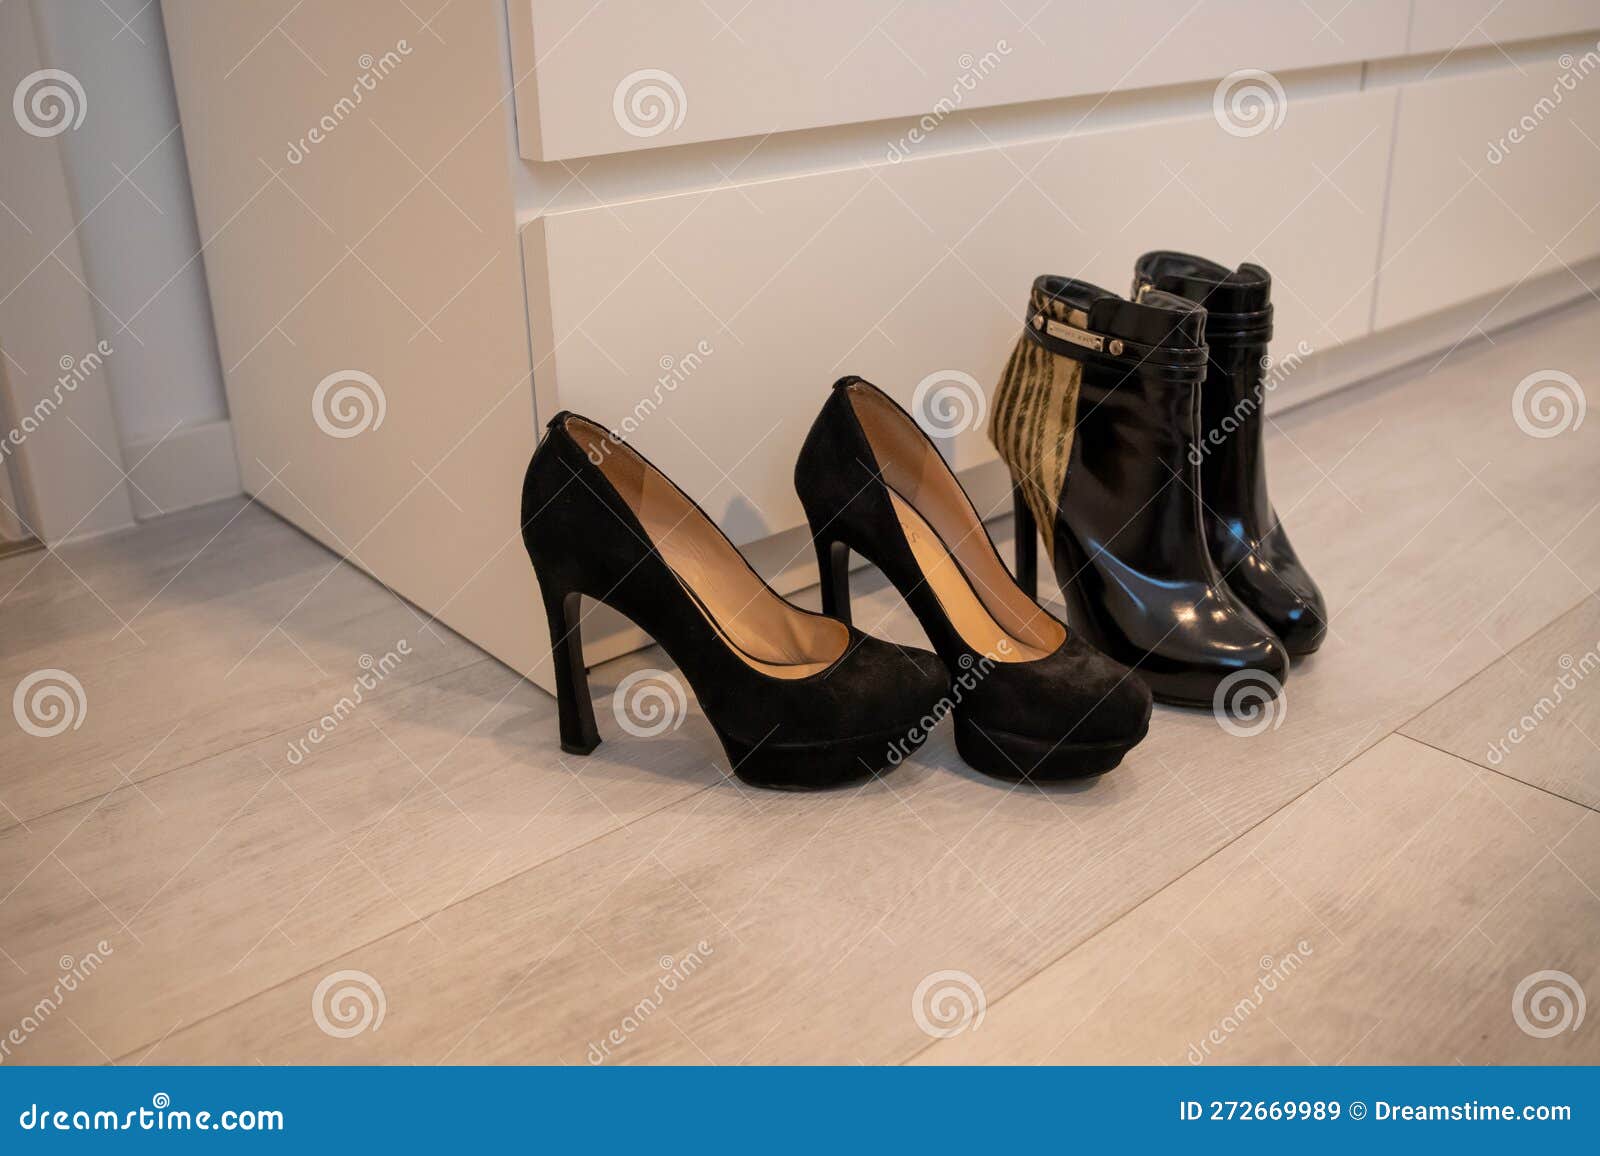 Fashion Mondays: Why tall girls wear heels - Maidenhead Advertiser